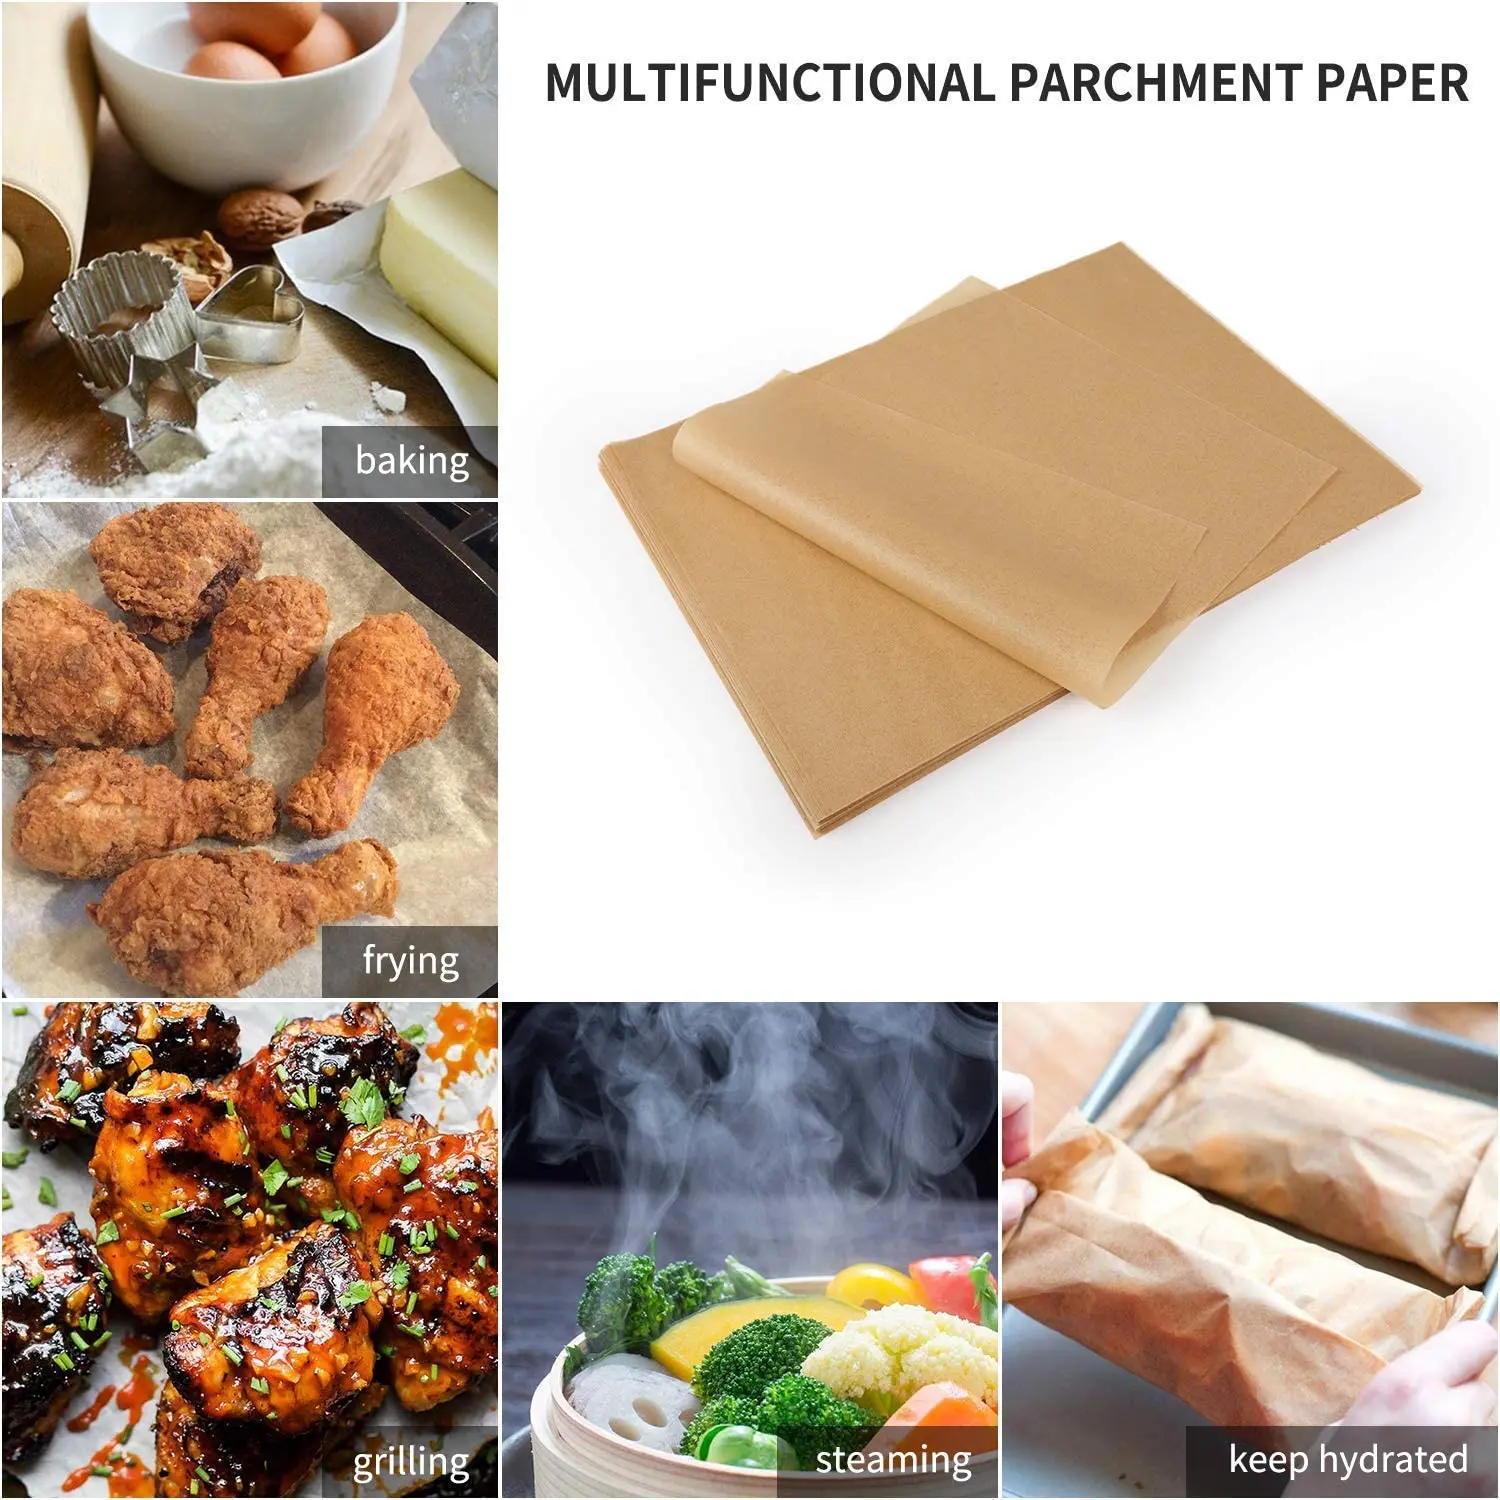 Precut Parchment Paper , 12x16 100 per Pack - SANE - Sewing and